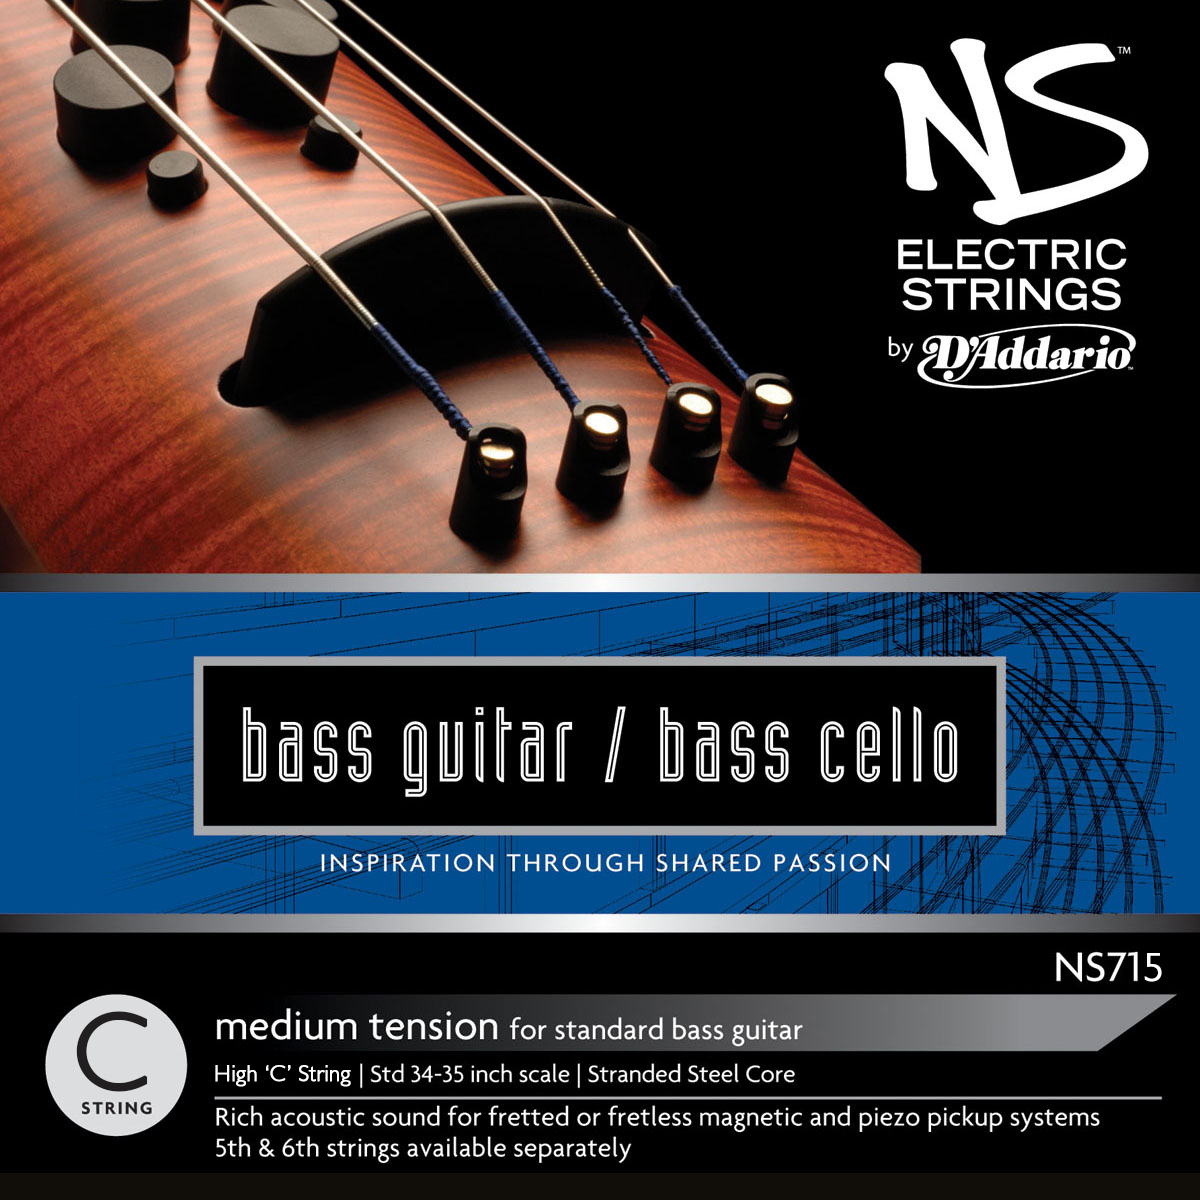 NS710 Bass Guitar/Bass Cello Strings